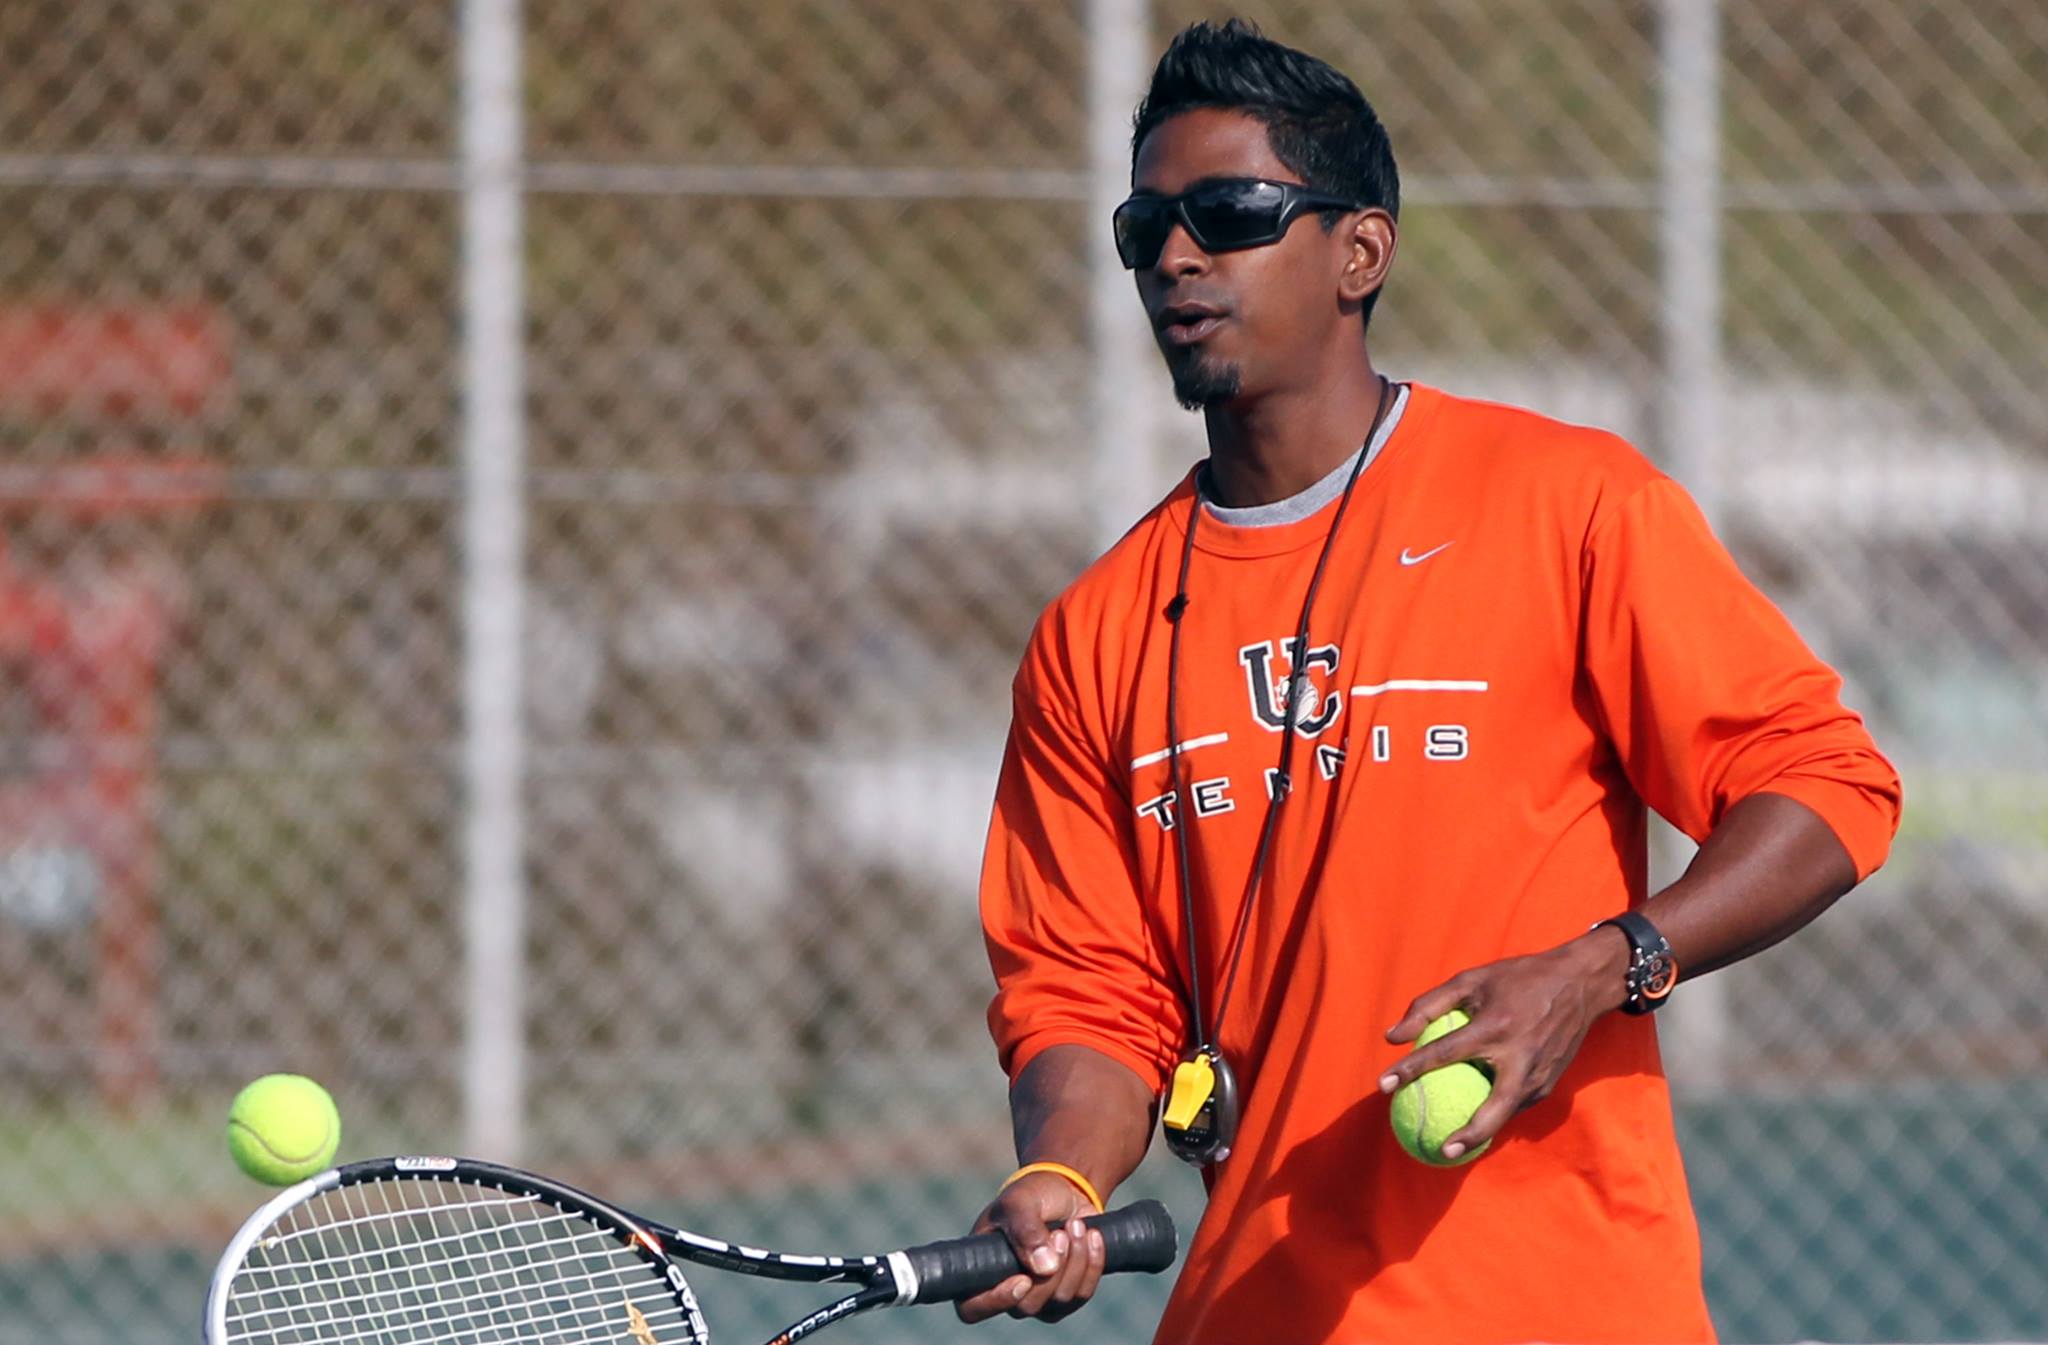 Roscoe M. teaches tennis lessons in Lexington , KY